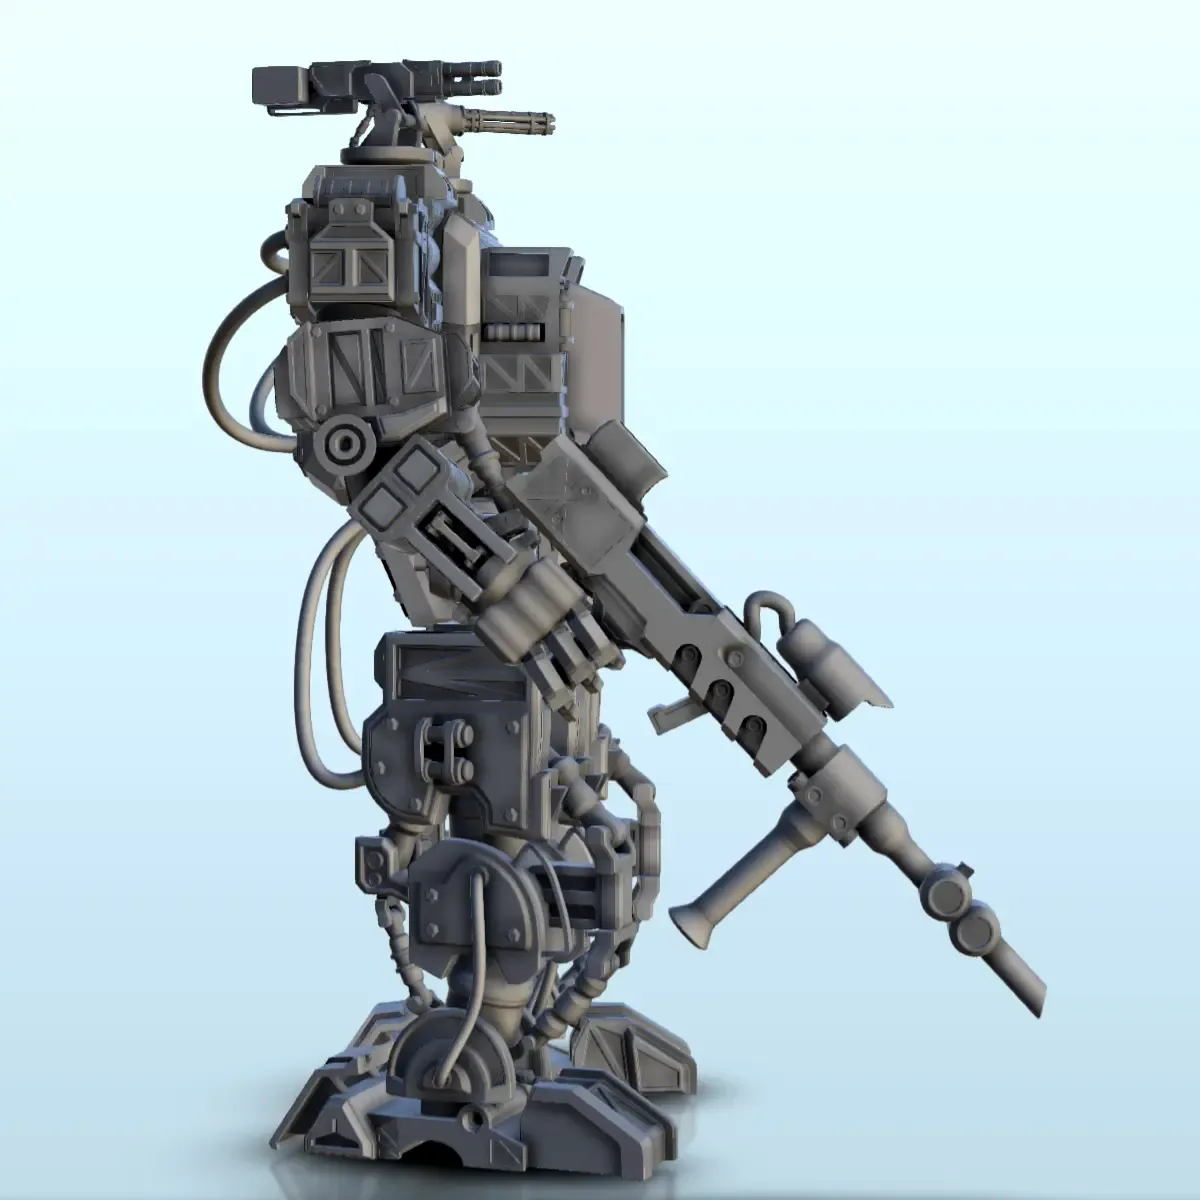 Enos combat robot (11) - sci-fi science fiction future 40k b